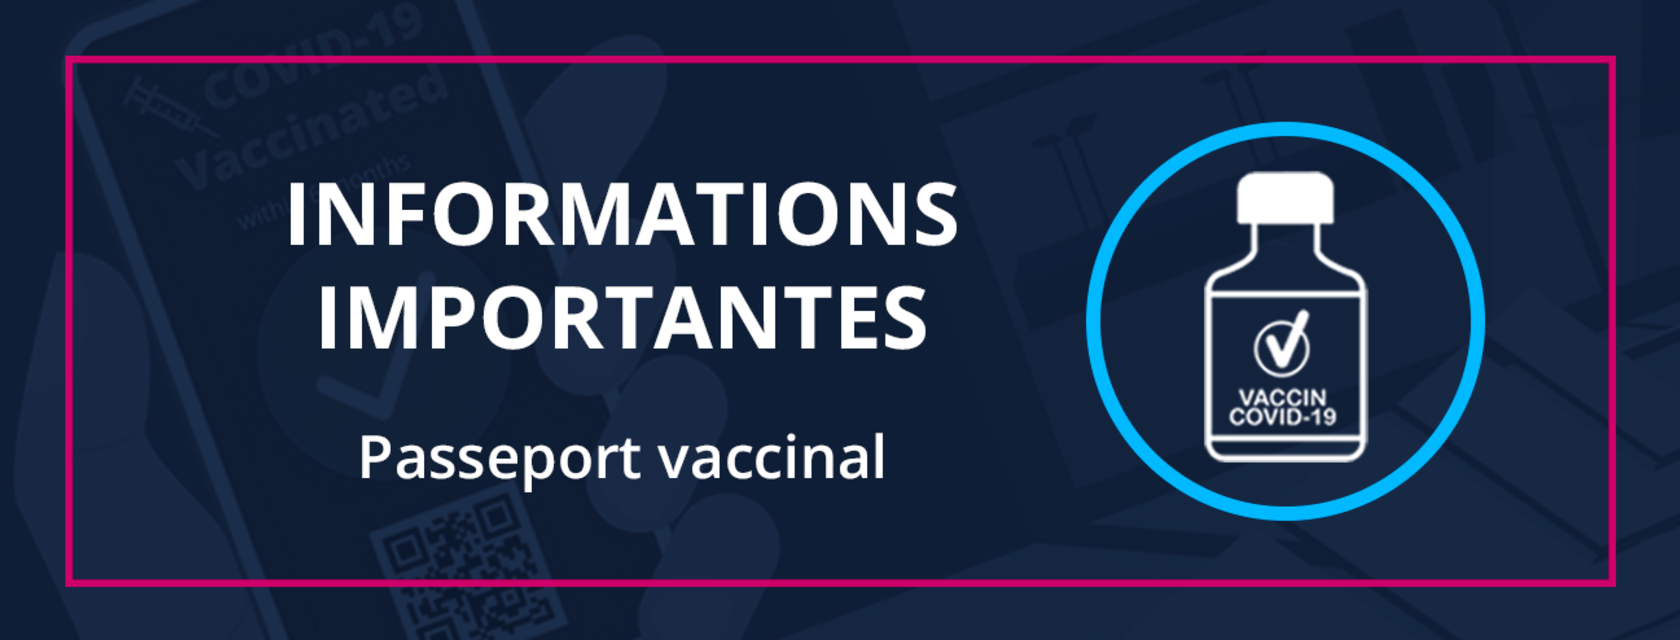 Important informations - Vaccination passport